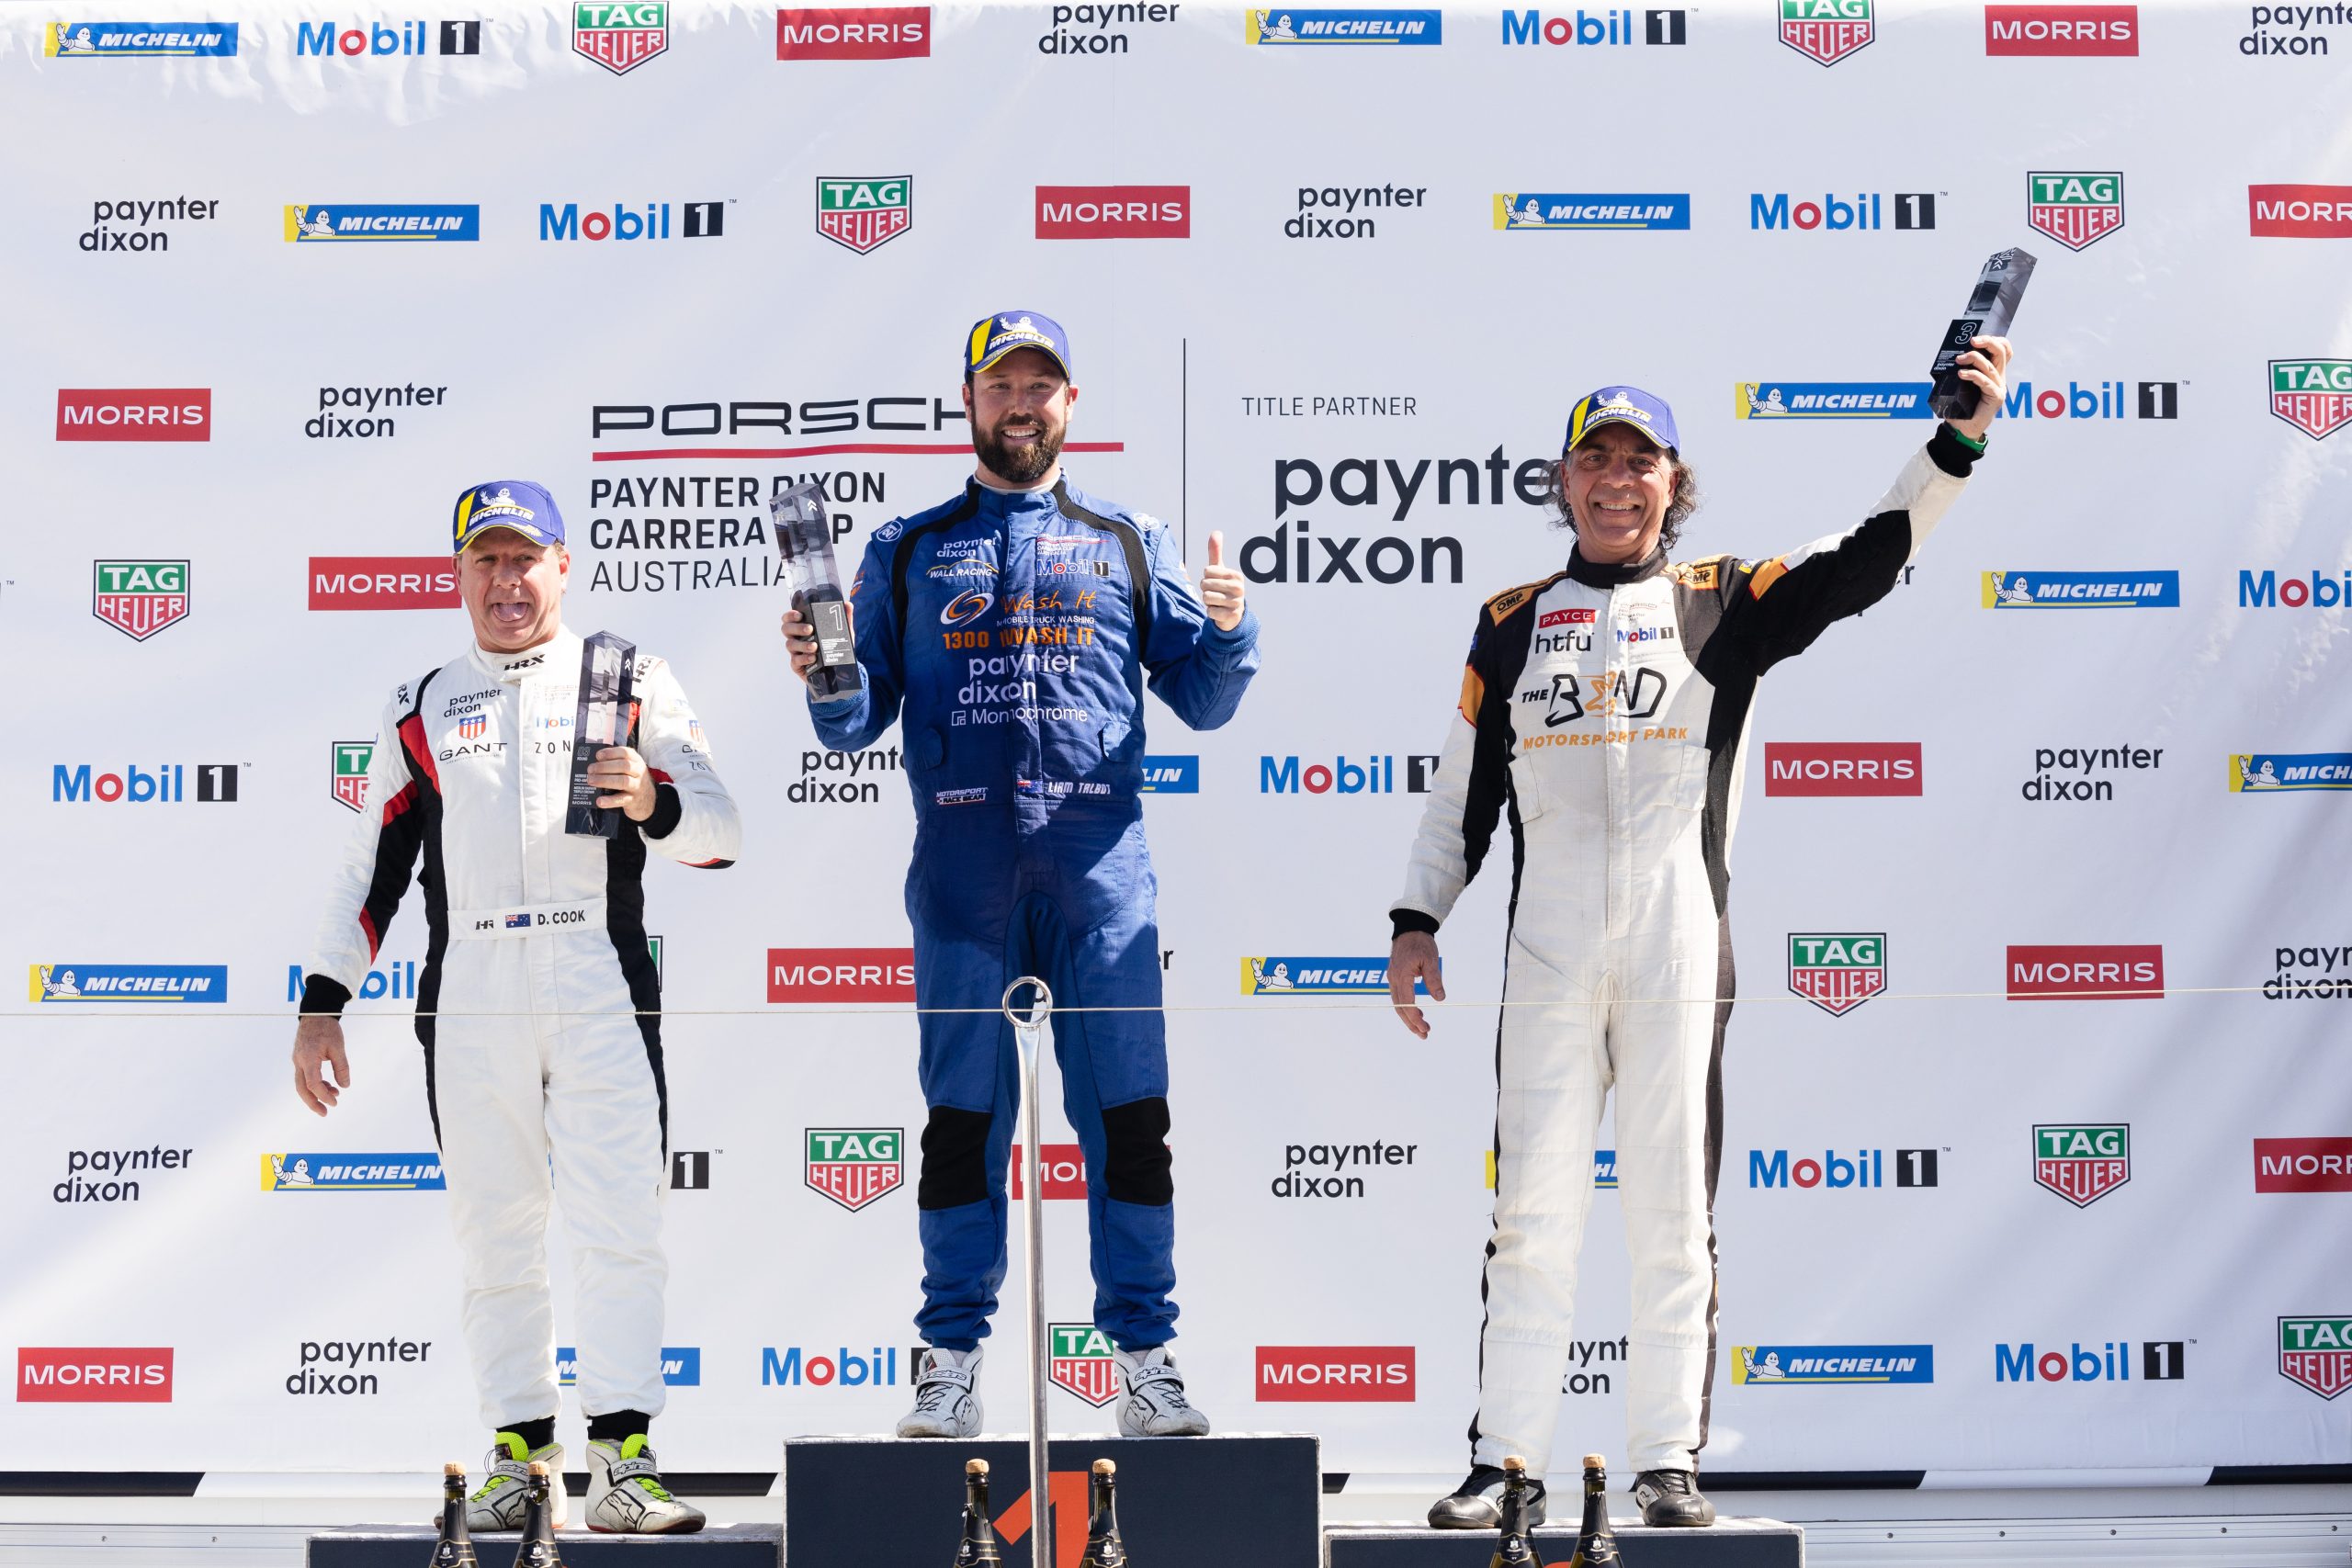 Porsche Carrera Cup Weekend Wrap – Darwin, NT